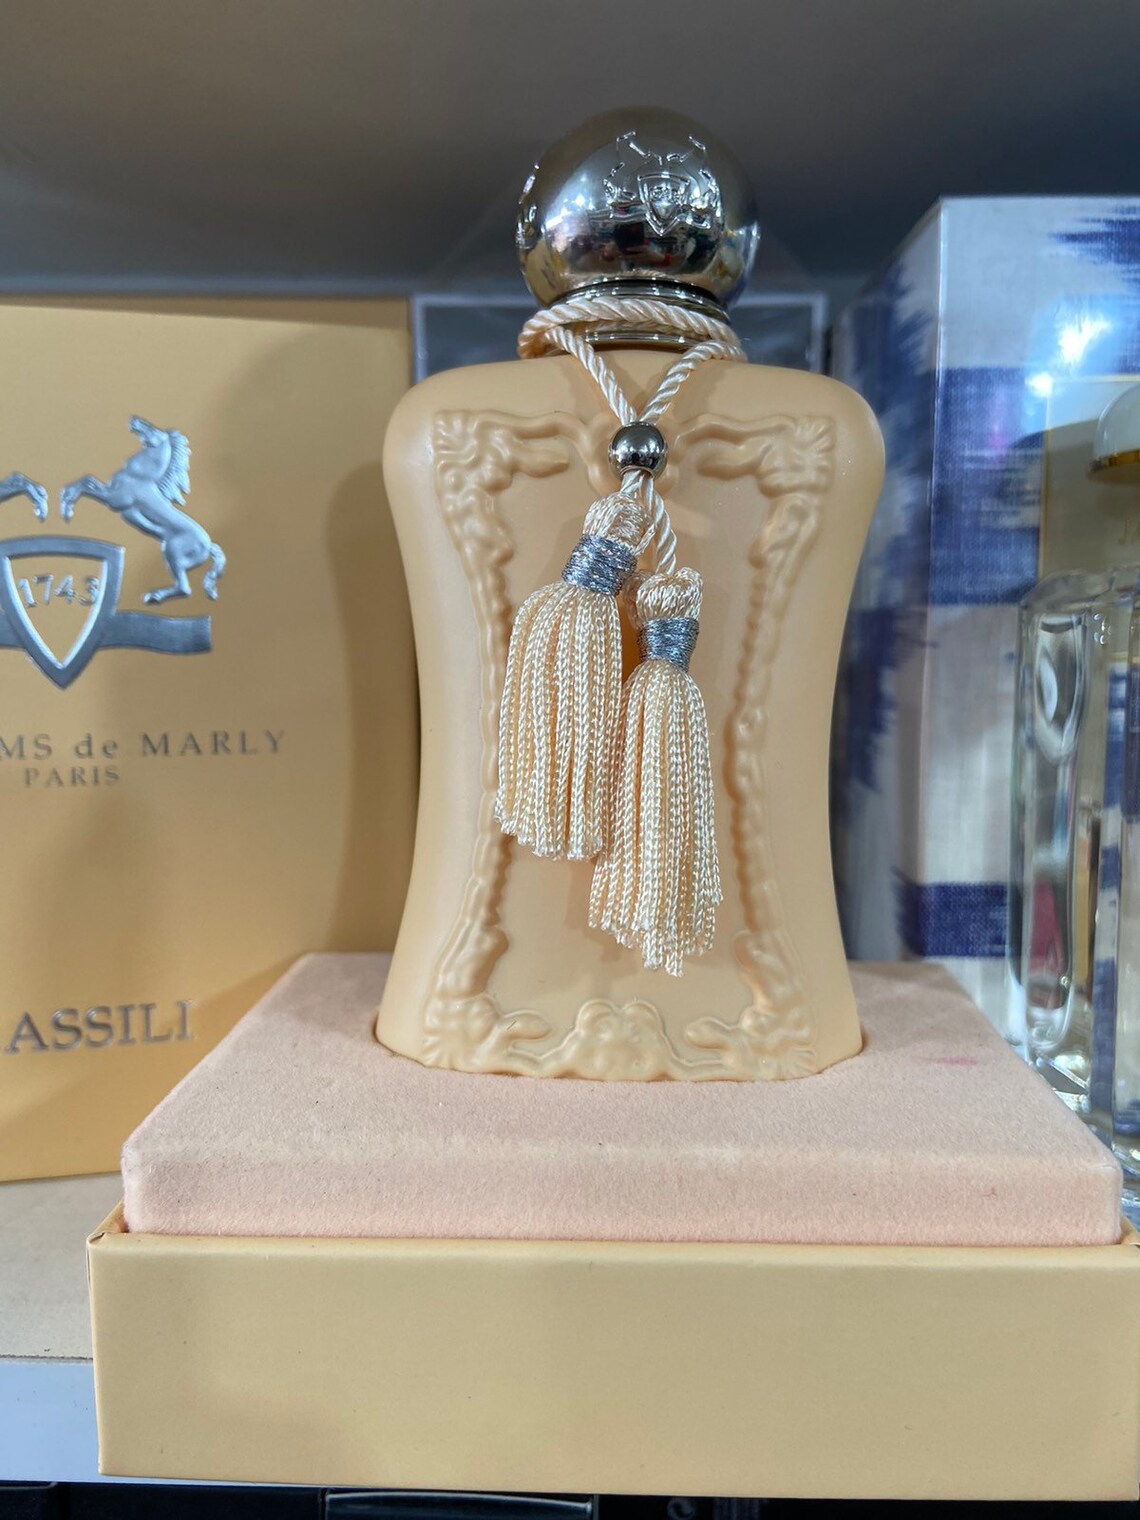 Parfums de Marly Cassili 75 ml | Etsy